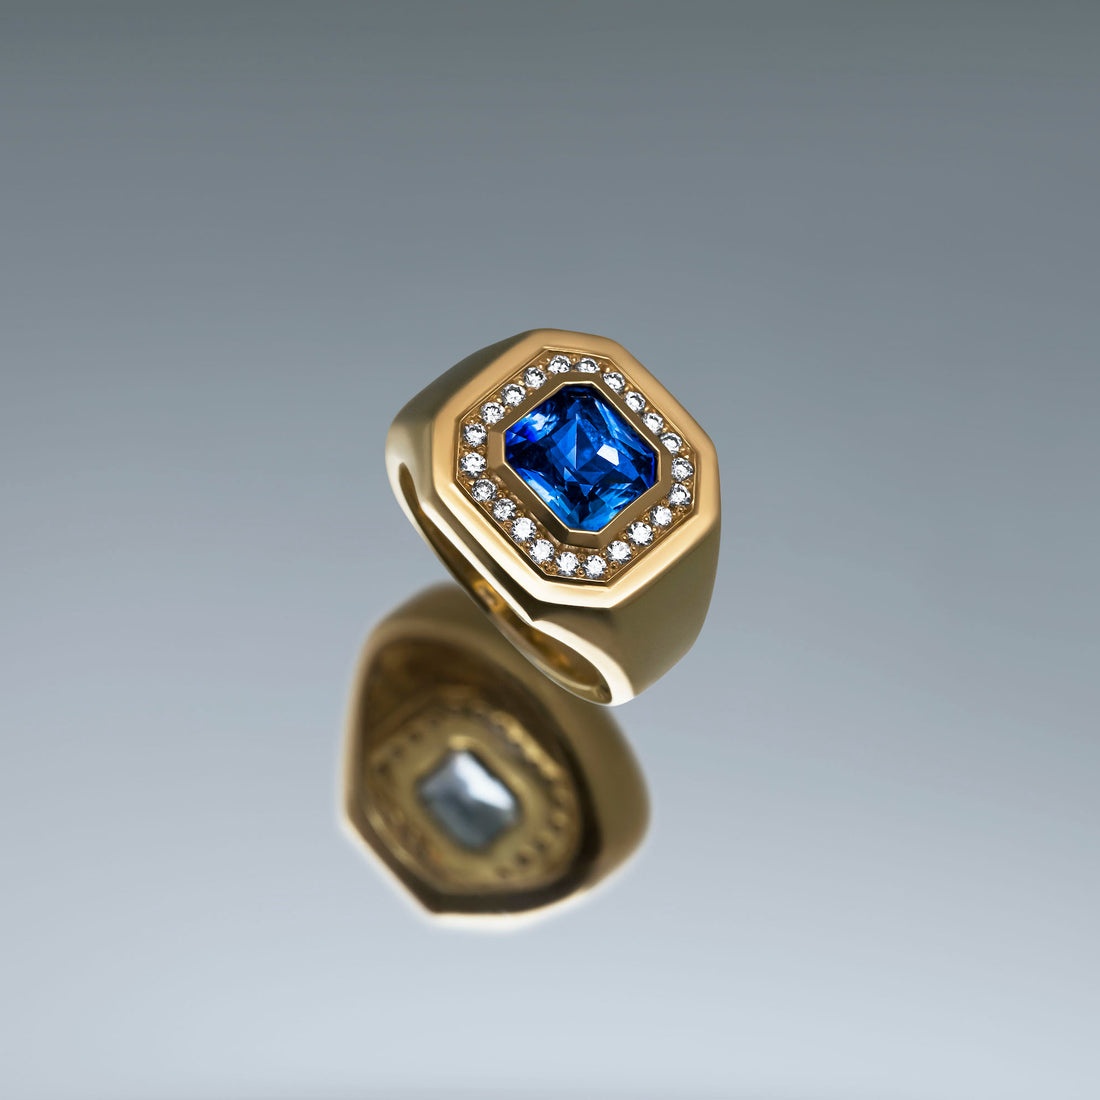  Blue Sapphire and Diamond Ring by Minka Jewels | The Cut London